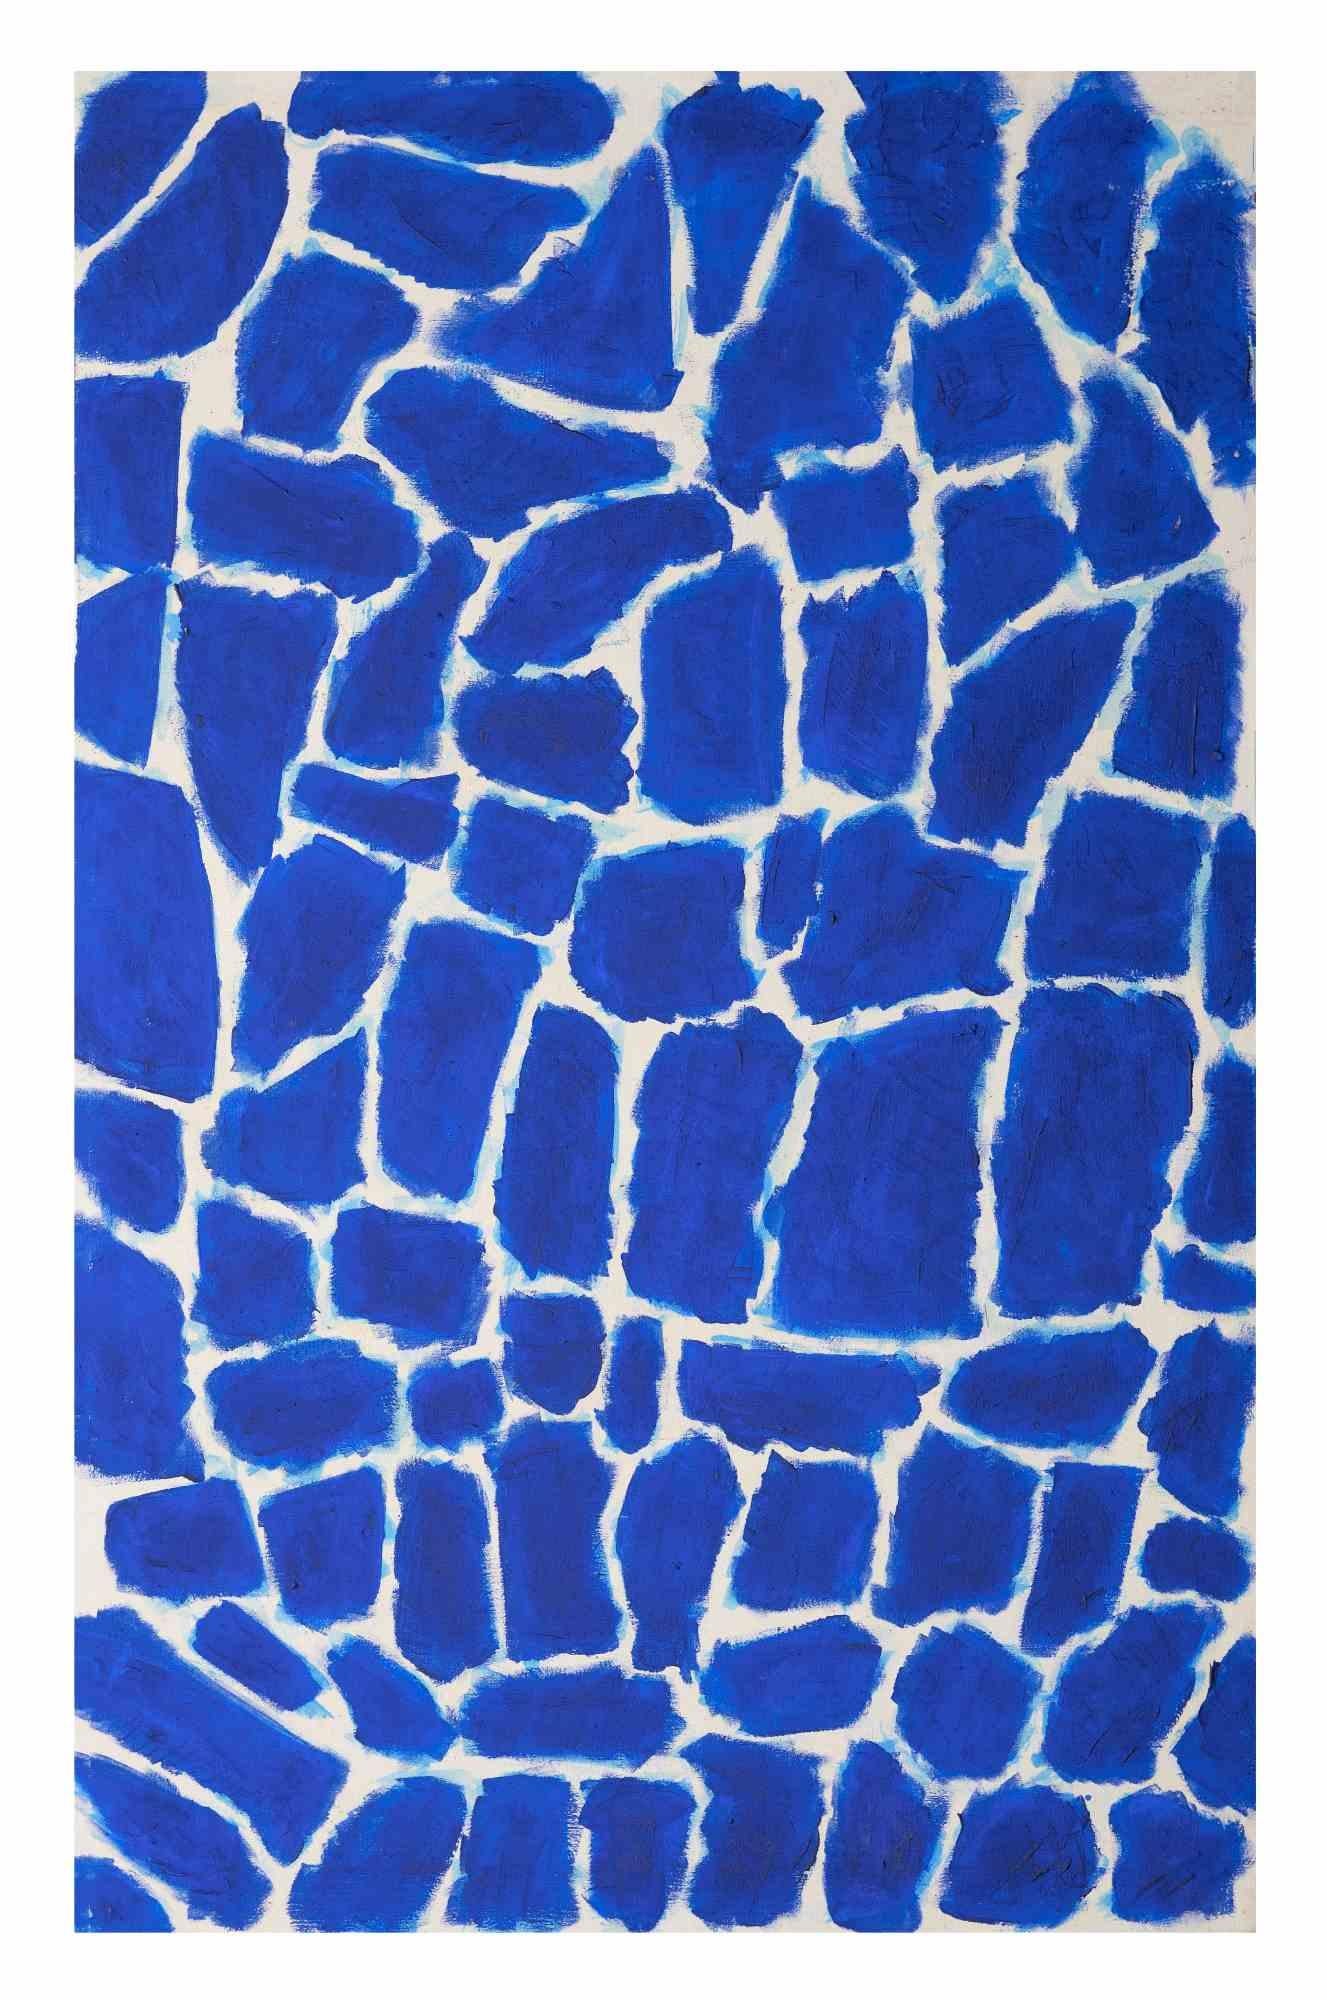 Composition abstraite bleue - Huile sur toile de Giorgio Lo Fermo - 2021